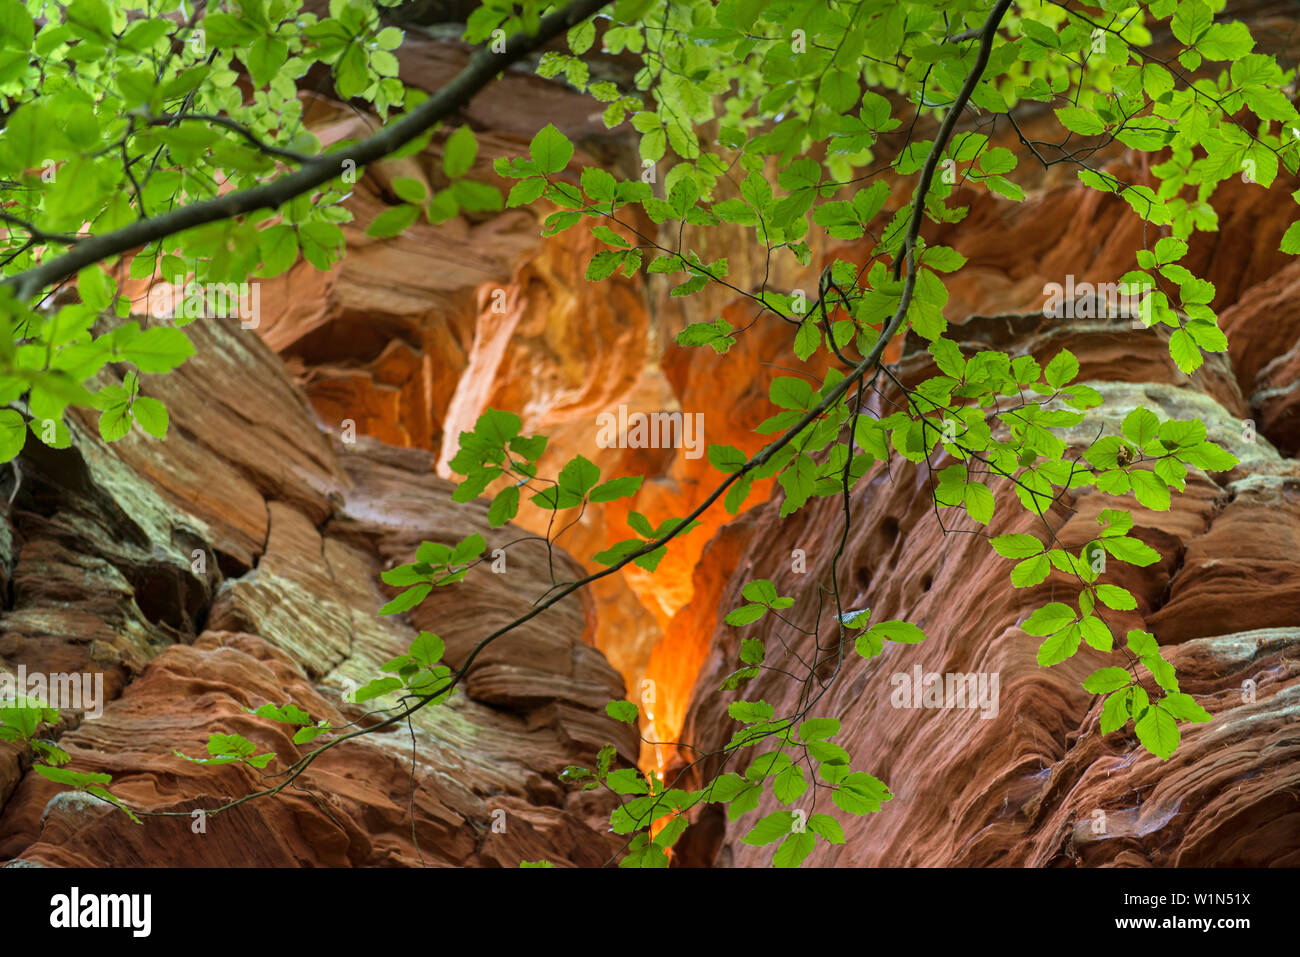 Altschlossfelsen, monumento naturale, Foresta del Palatinato, Eppenbrunn, Renania-Palatinato, Germania Foto Stock